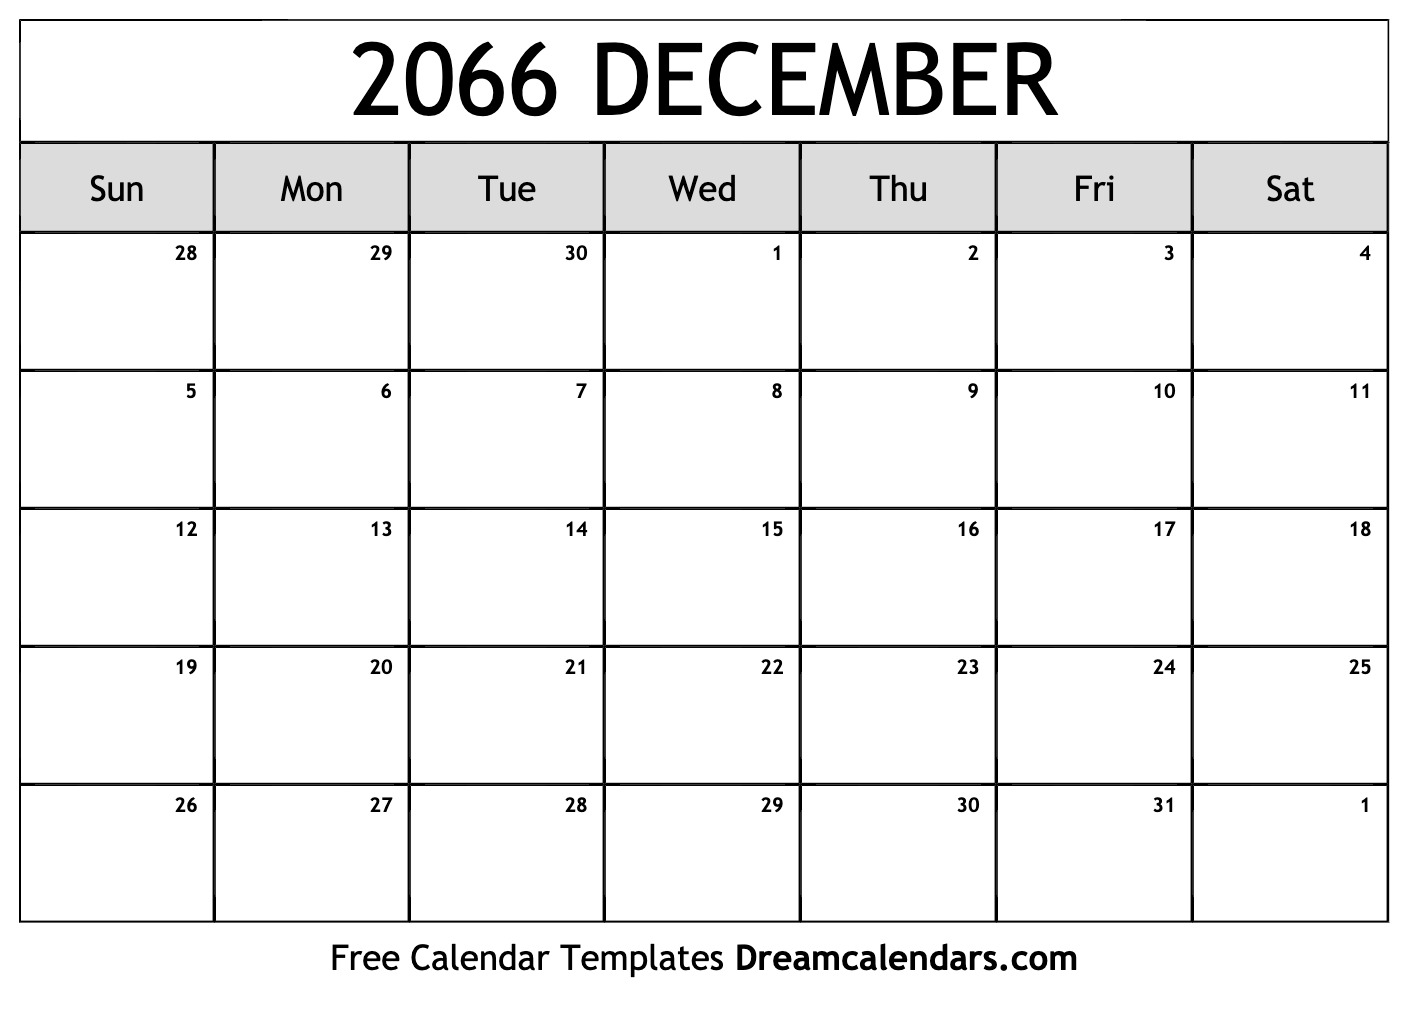 december-2066-calendar-free-blank-printable-with-holidays